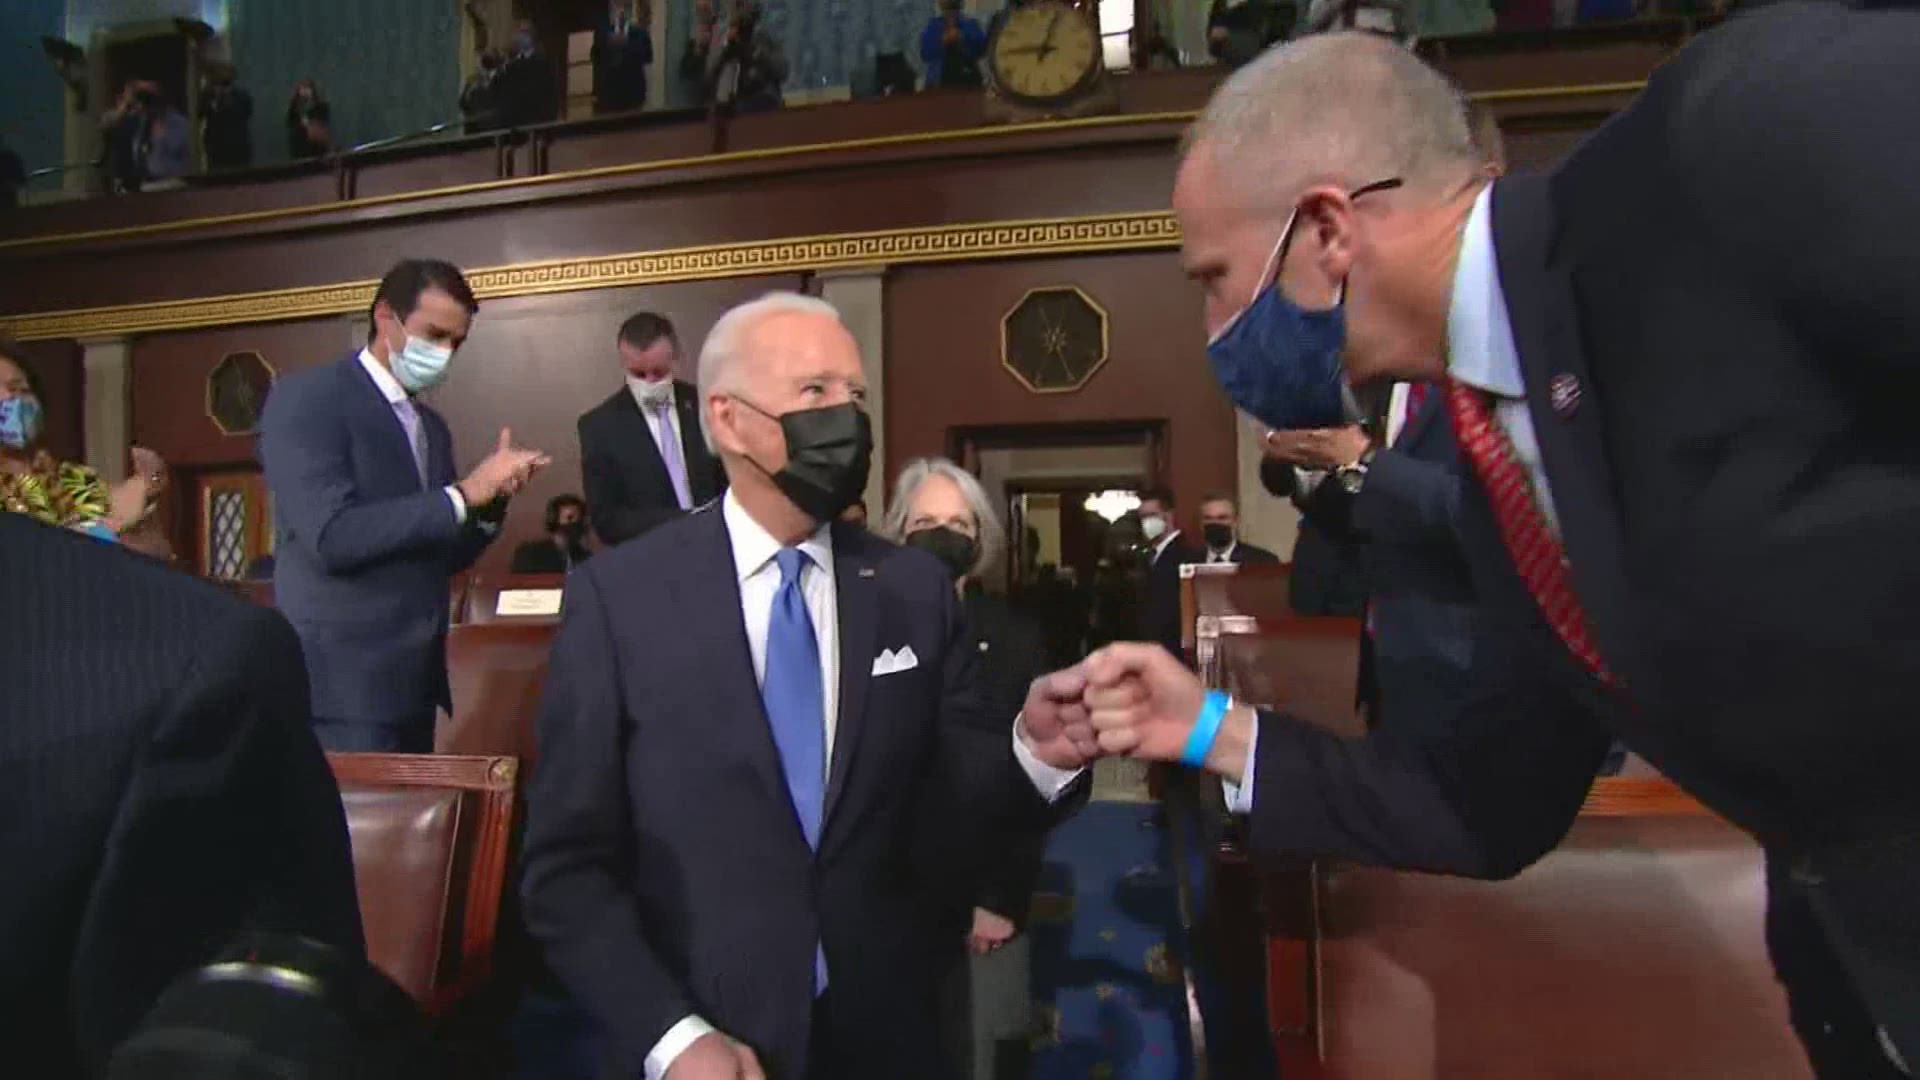 President Joe Biden enters the House chamber to address Congress.